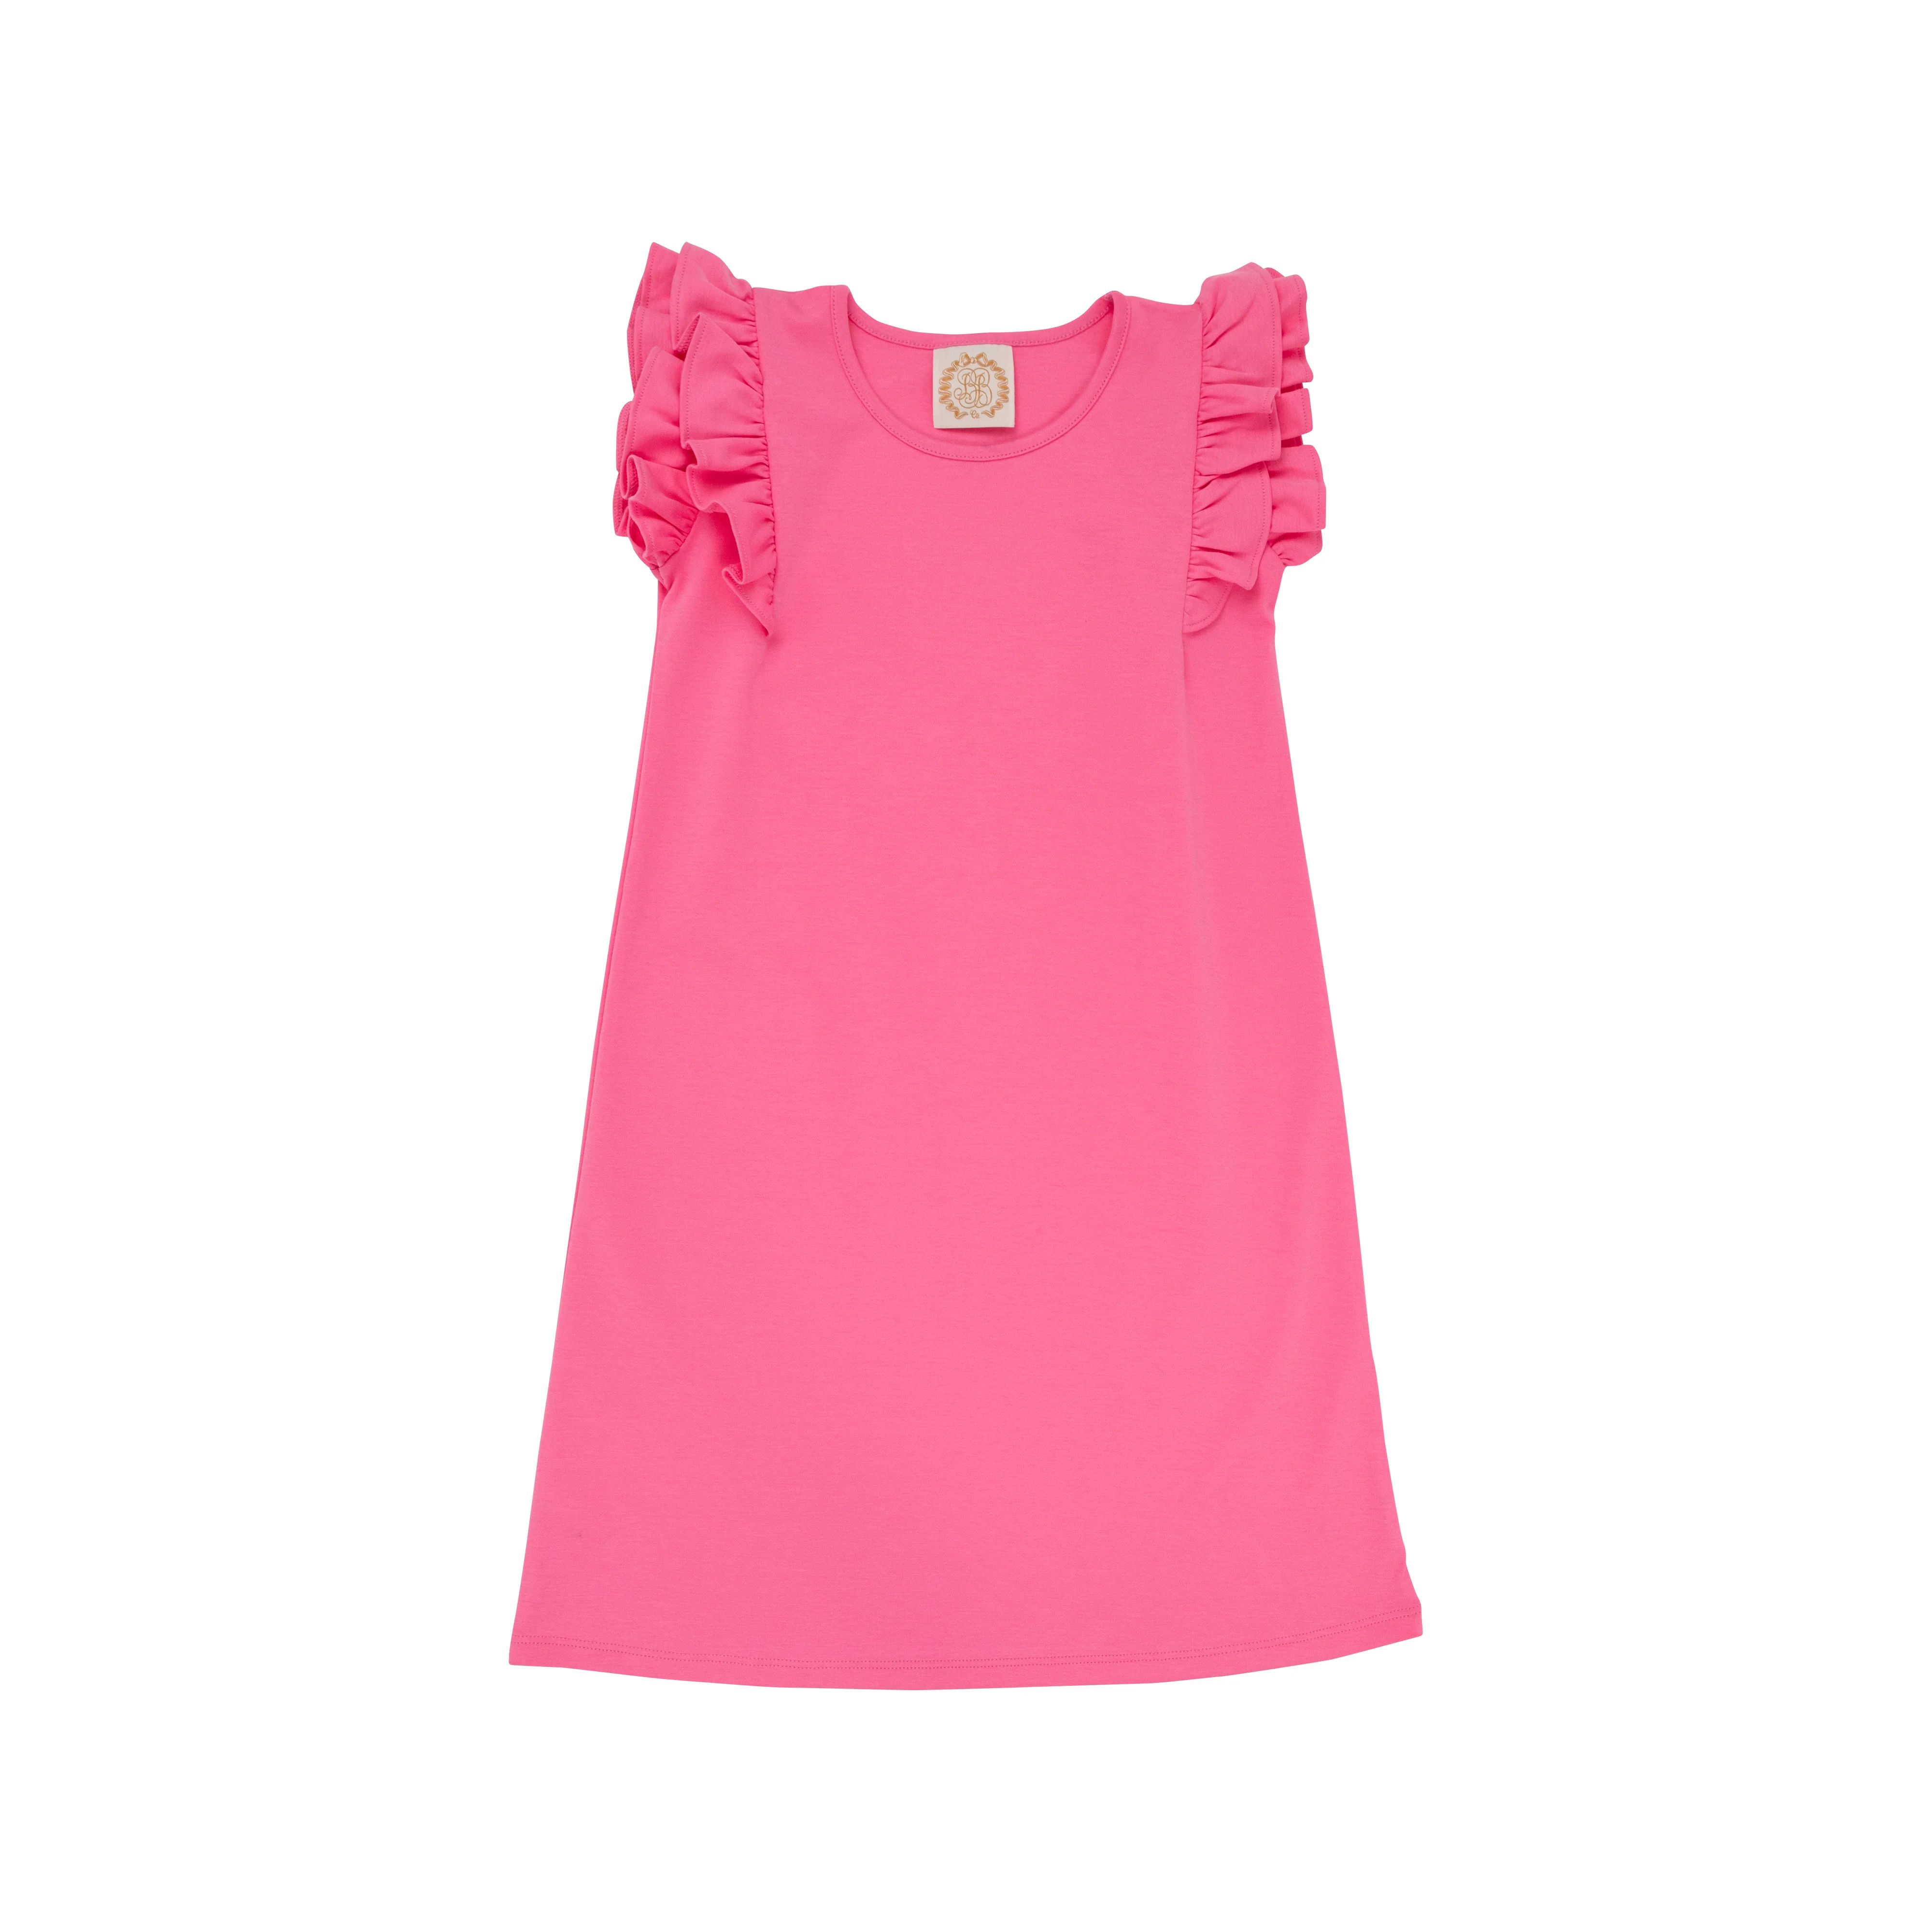 Ruehling Ruffle Dress - Winter Park Pink | The Beaufort Bonnet Company